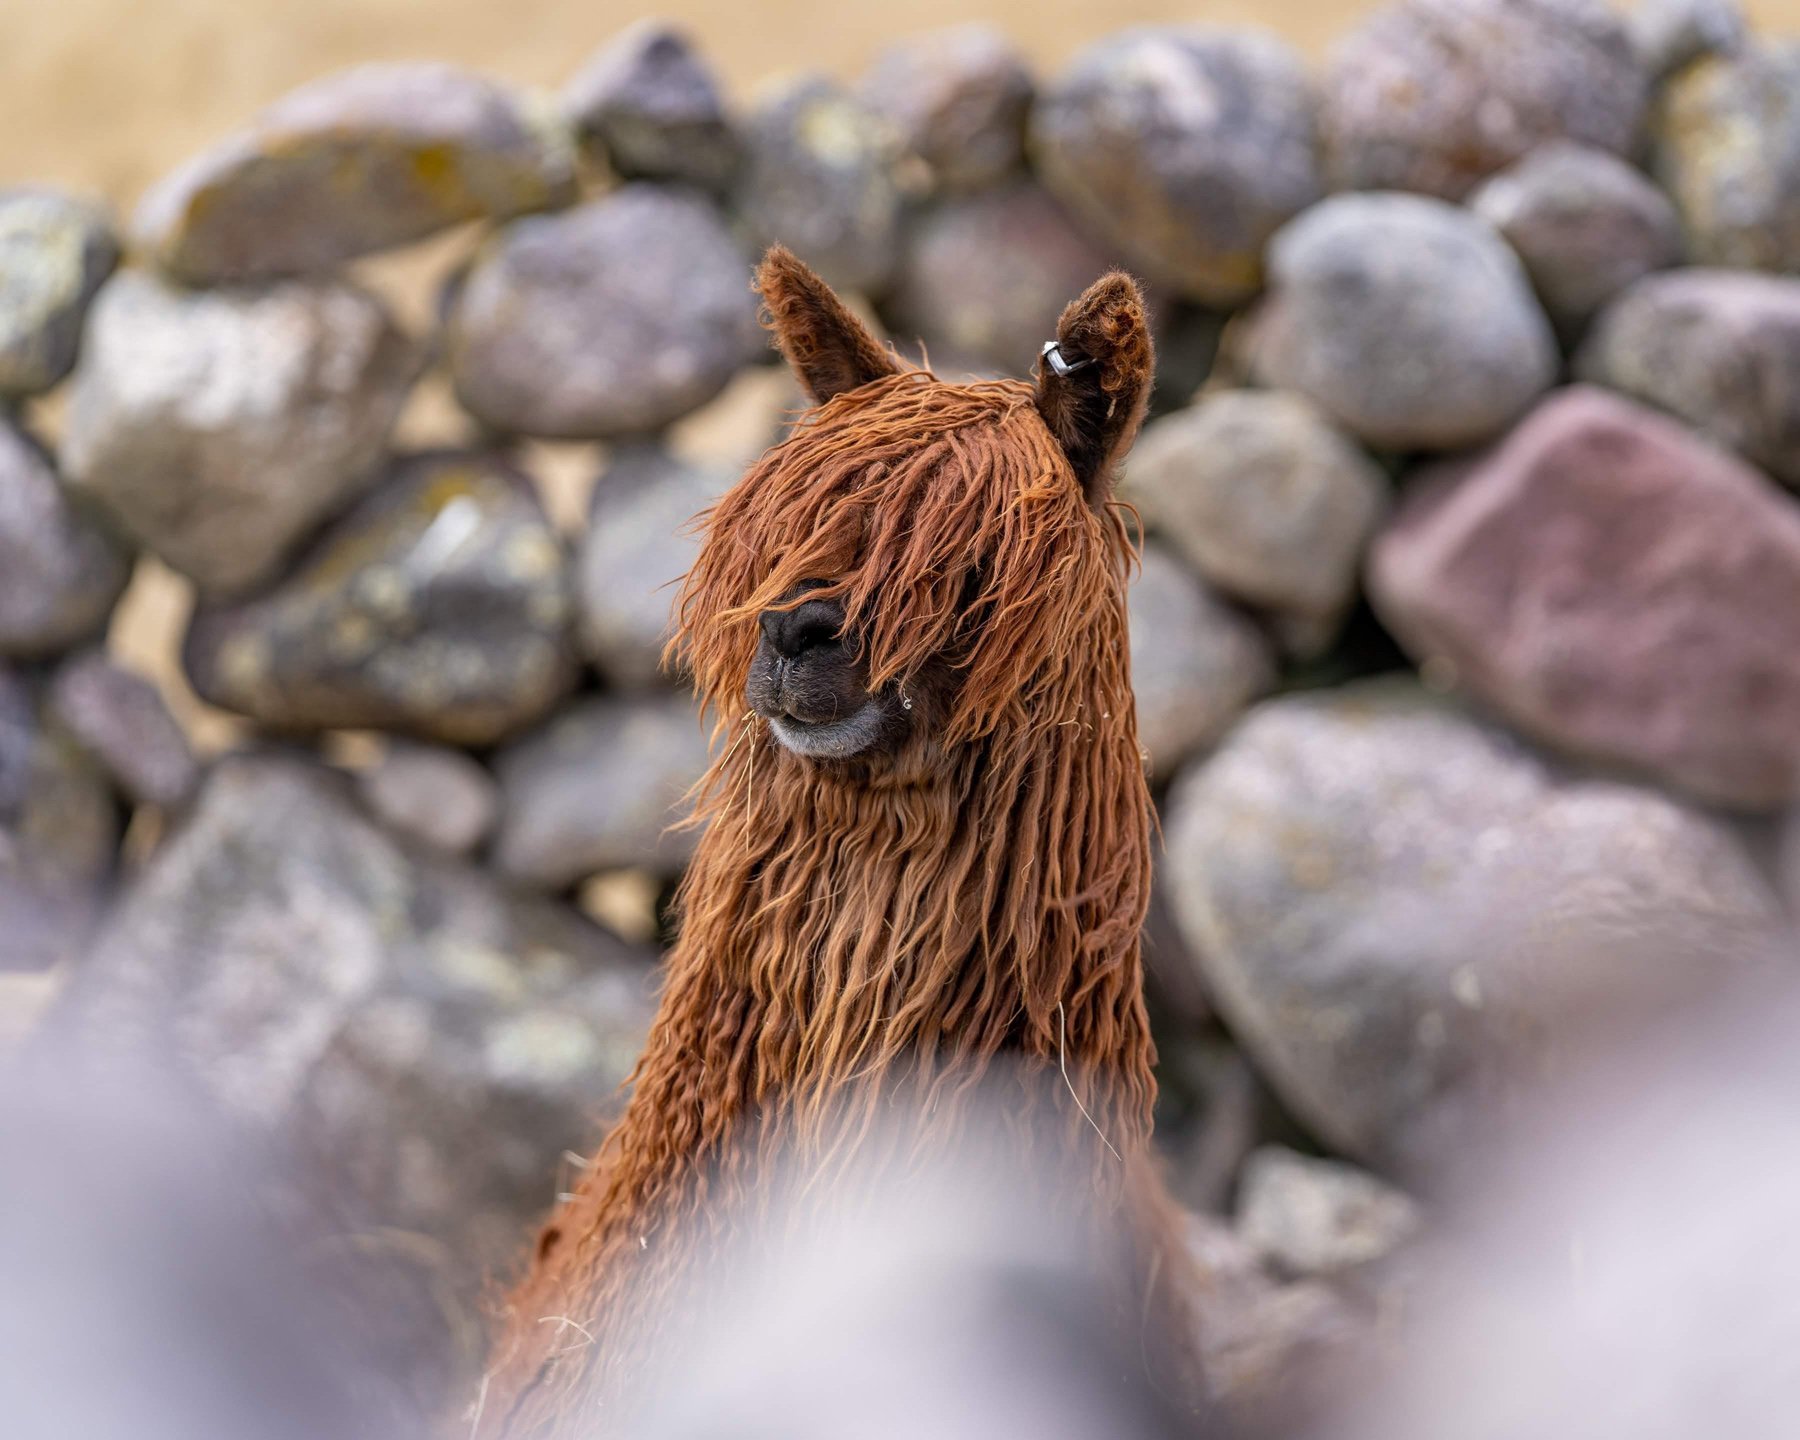 007_Pet photography_Alpaca Photograph_Photography by Wasim Muklashy.jpeg